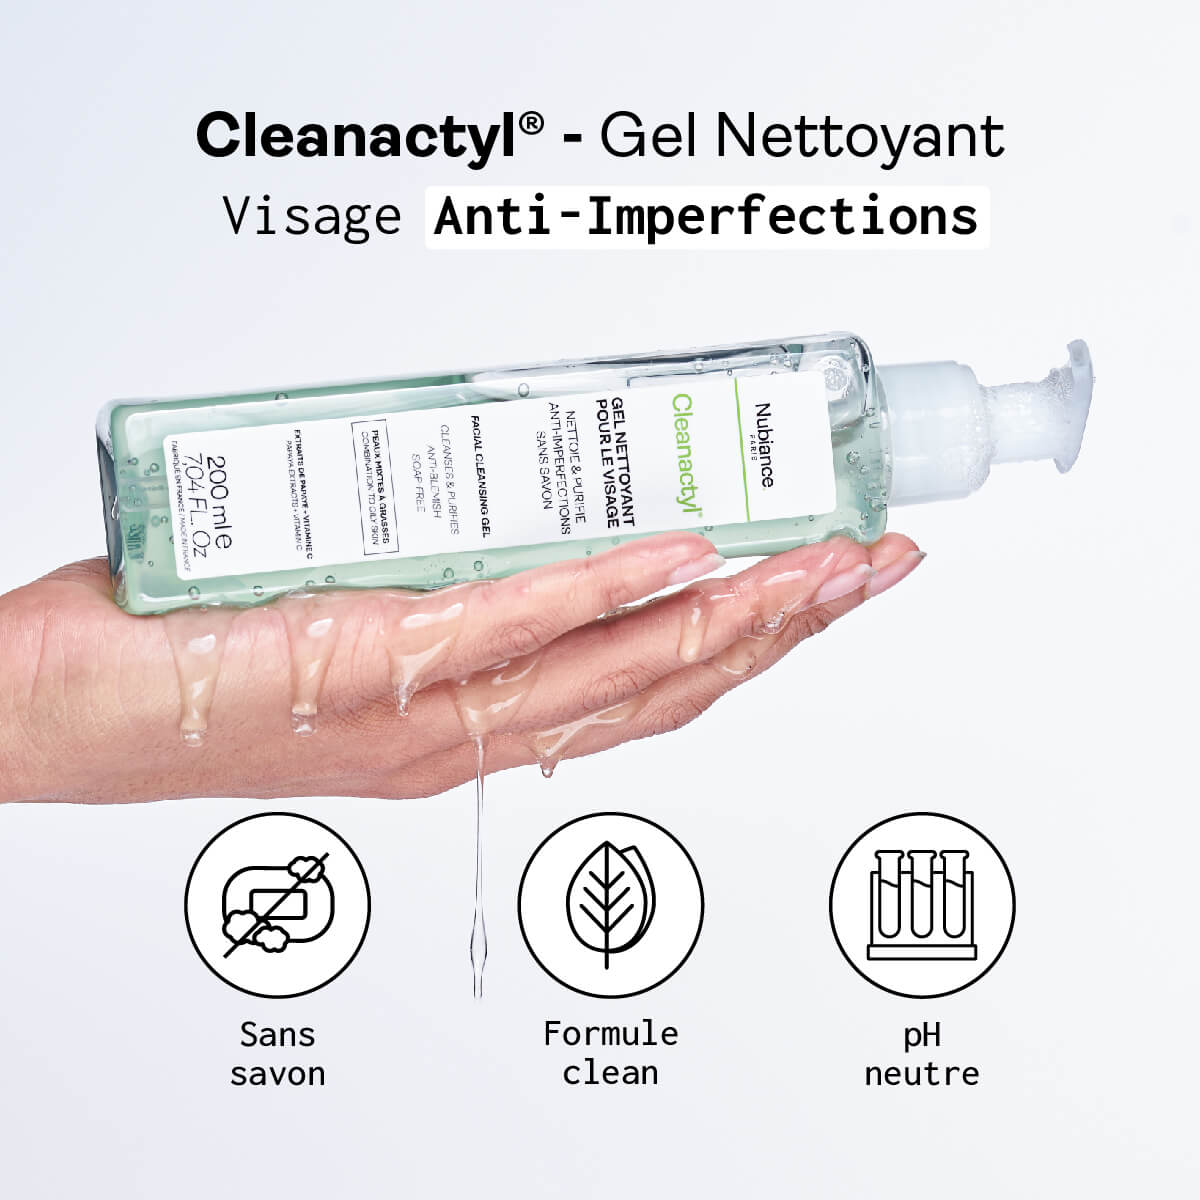 Cleanactyl® - Gel Nettoyant Visage Anti-Imperfections